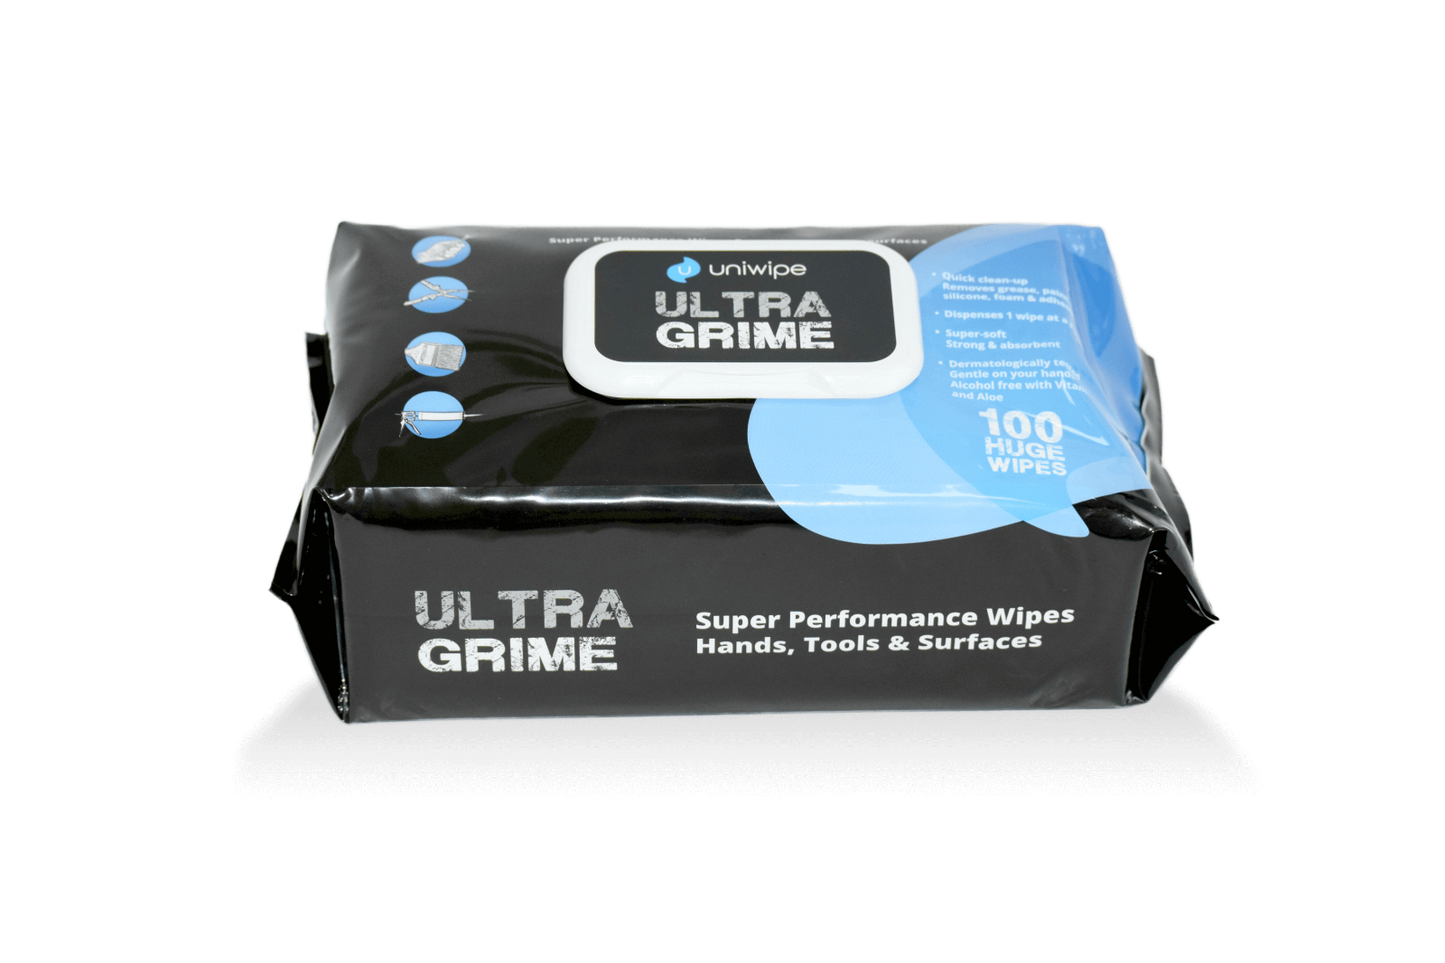 Uniwipe Ultra Grime Reinigungstücher